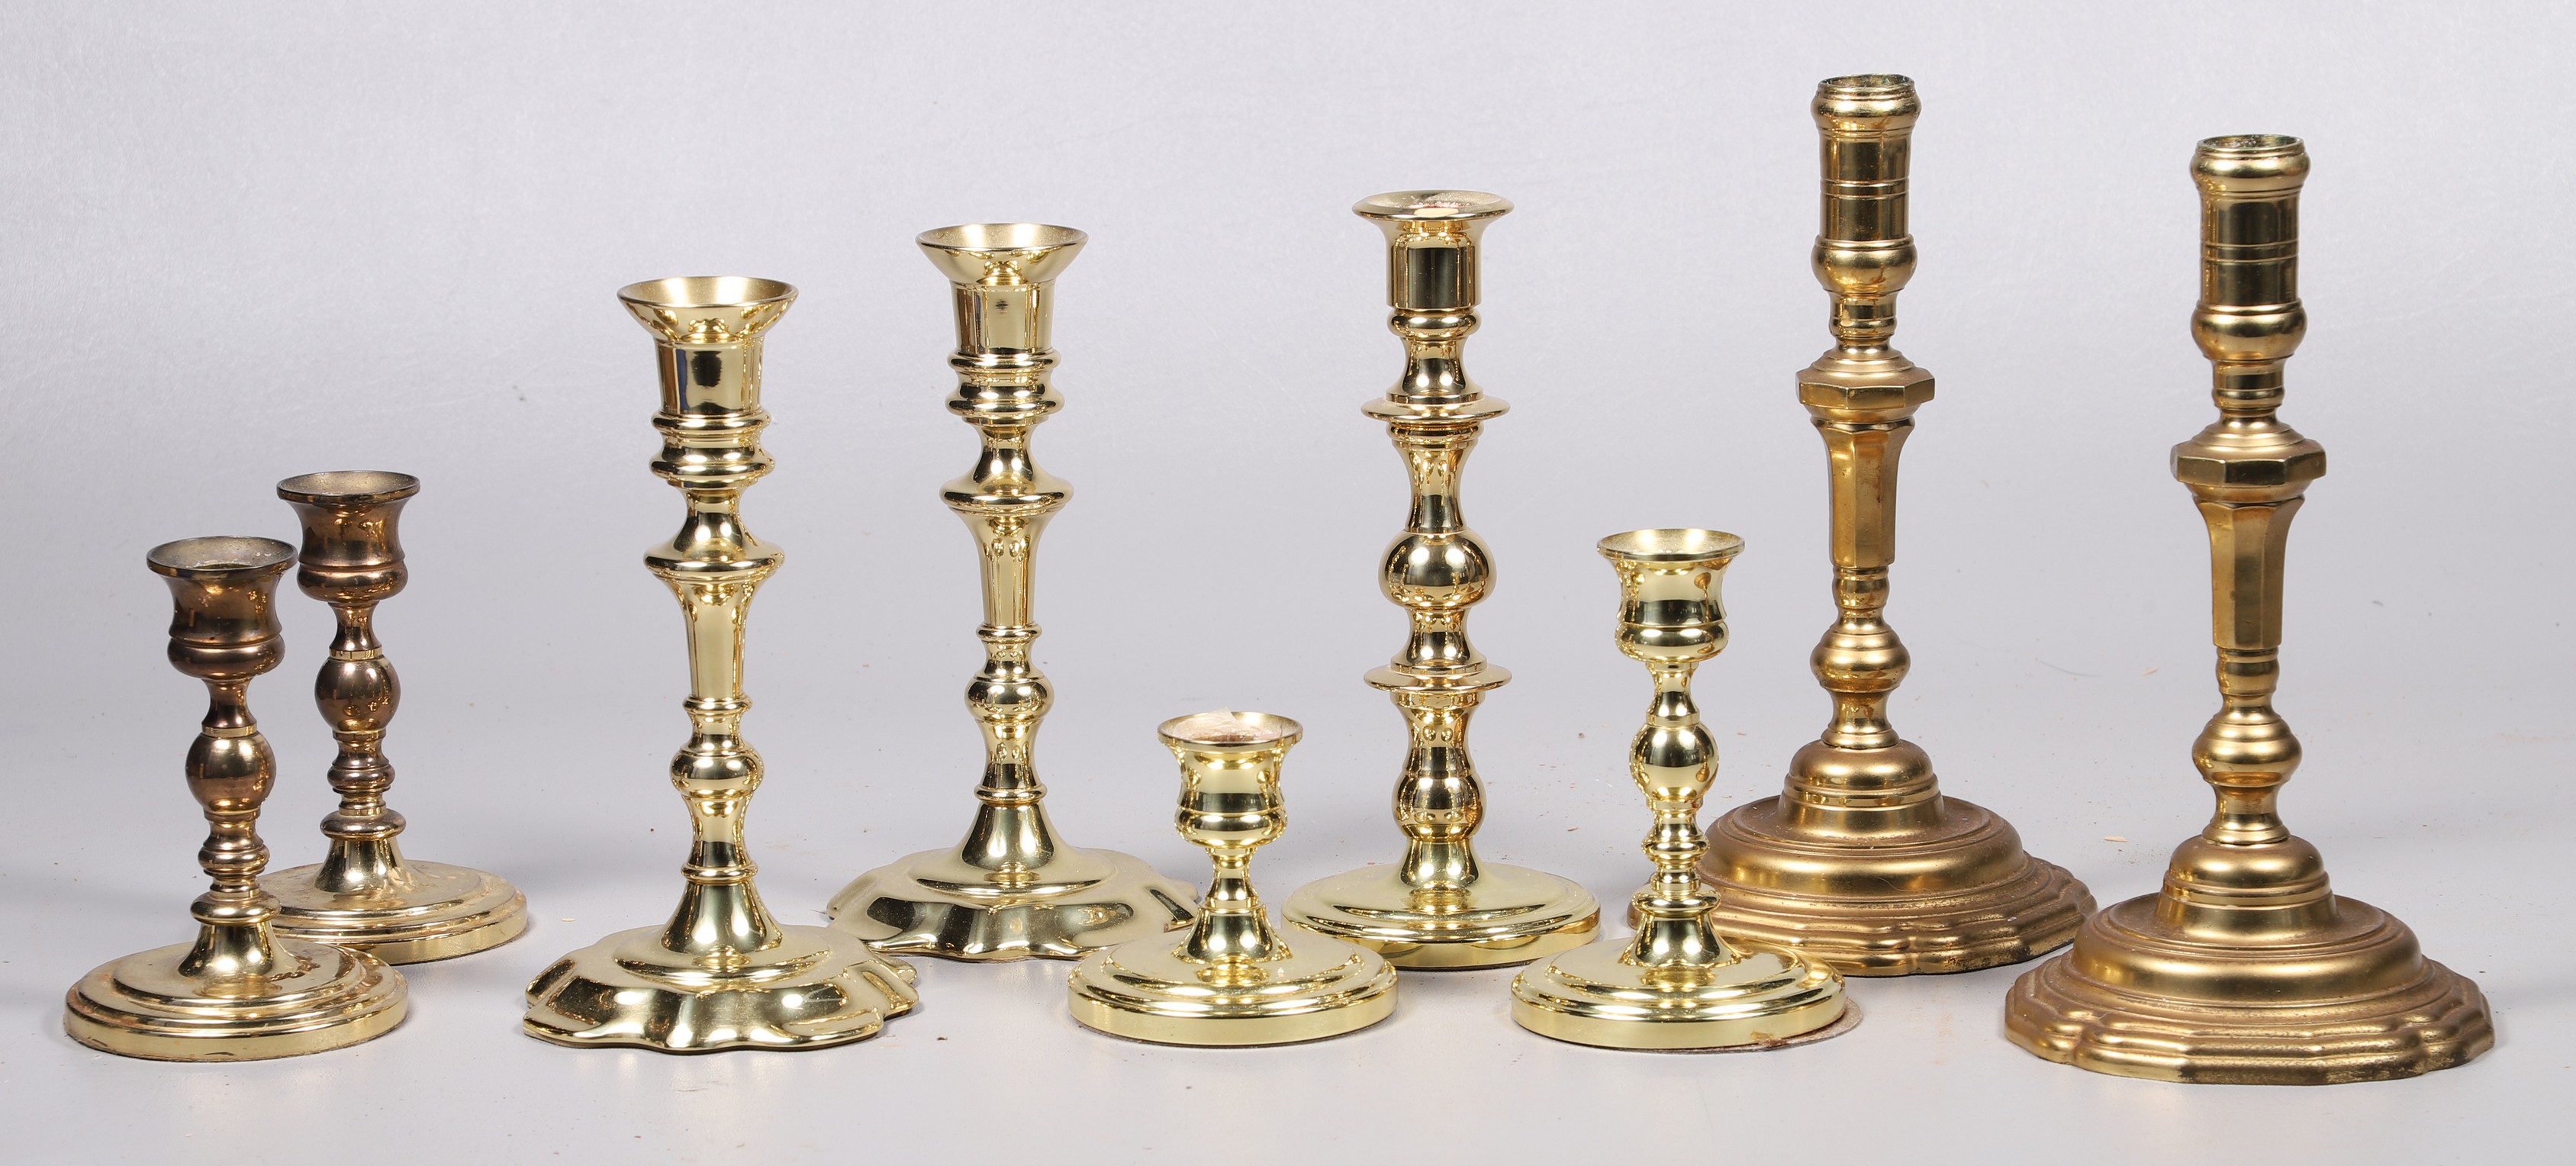  9 Brass candlesticks c o pair 3b5bbc